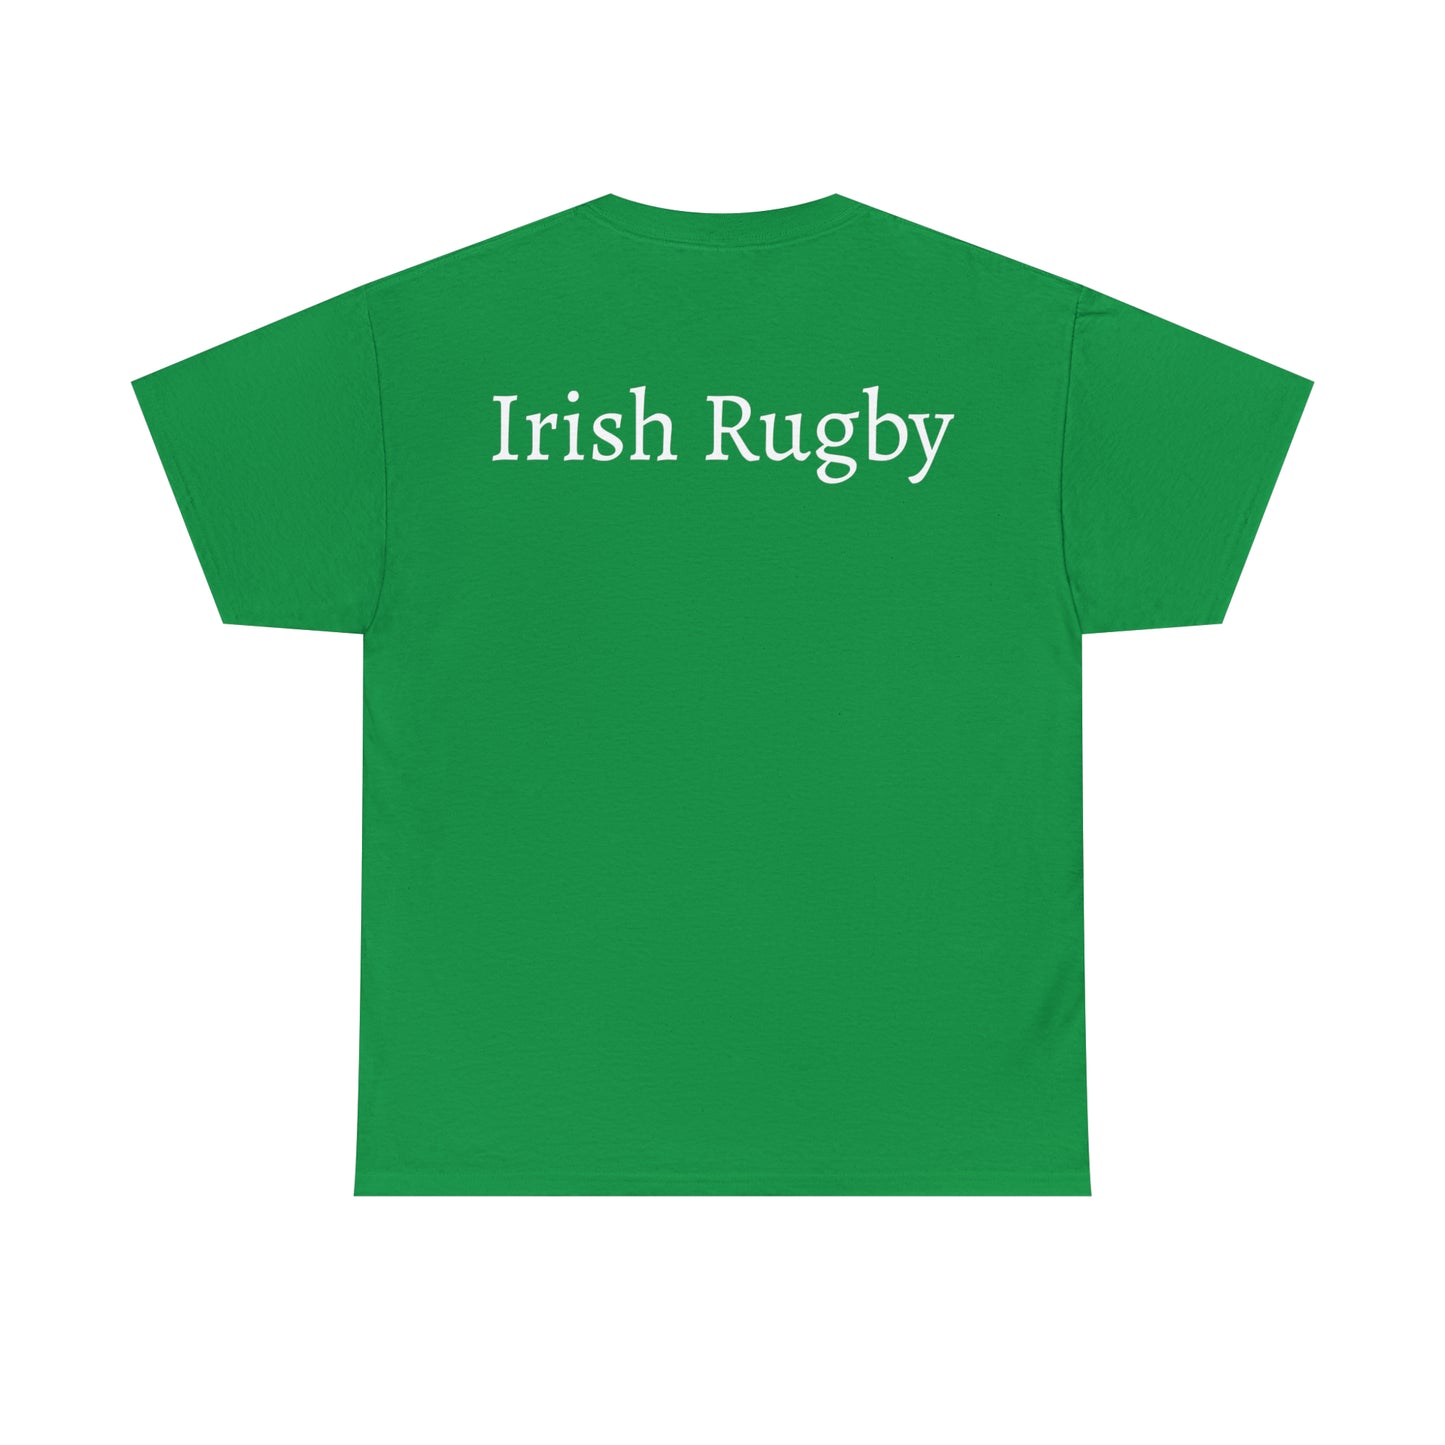 Ready Ireland - dark shirts